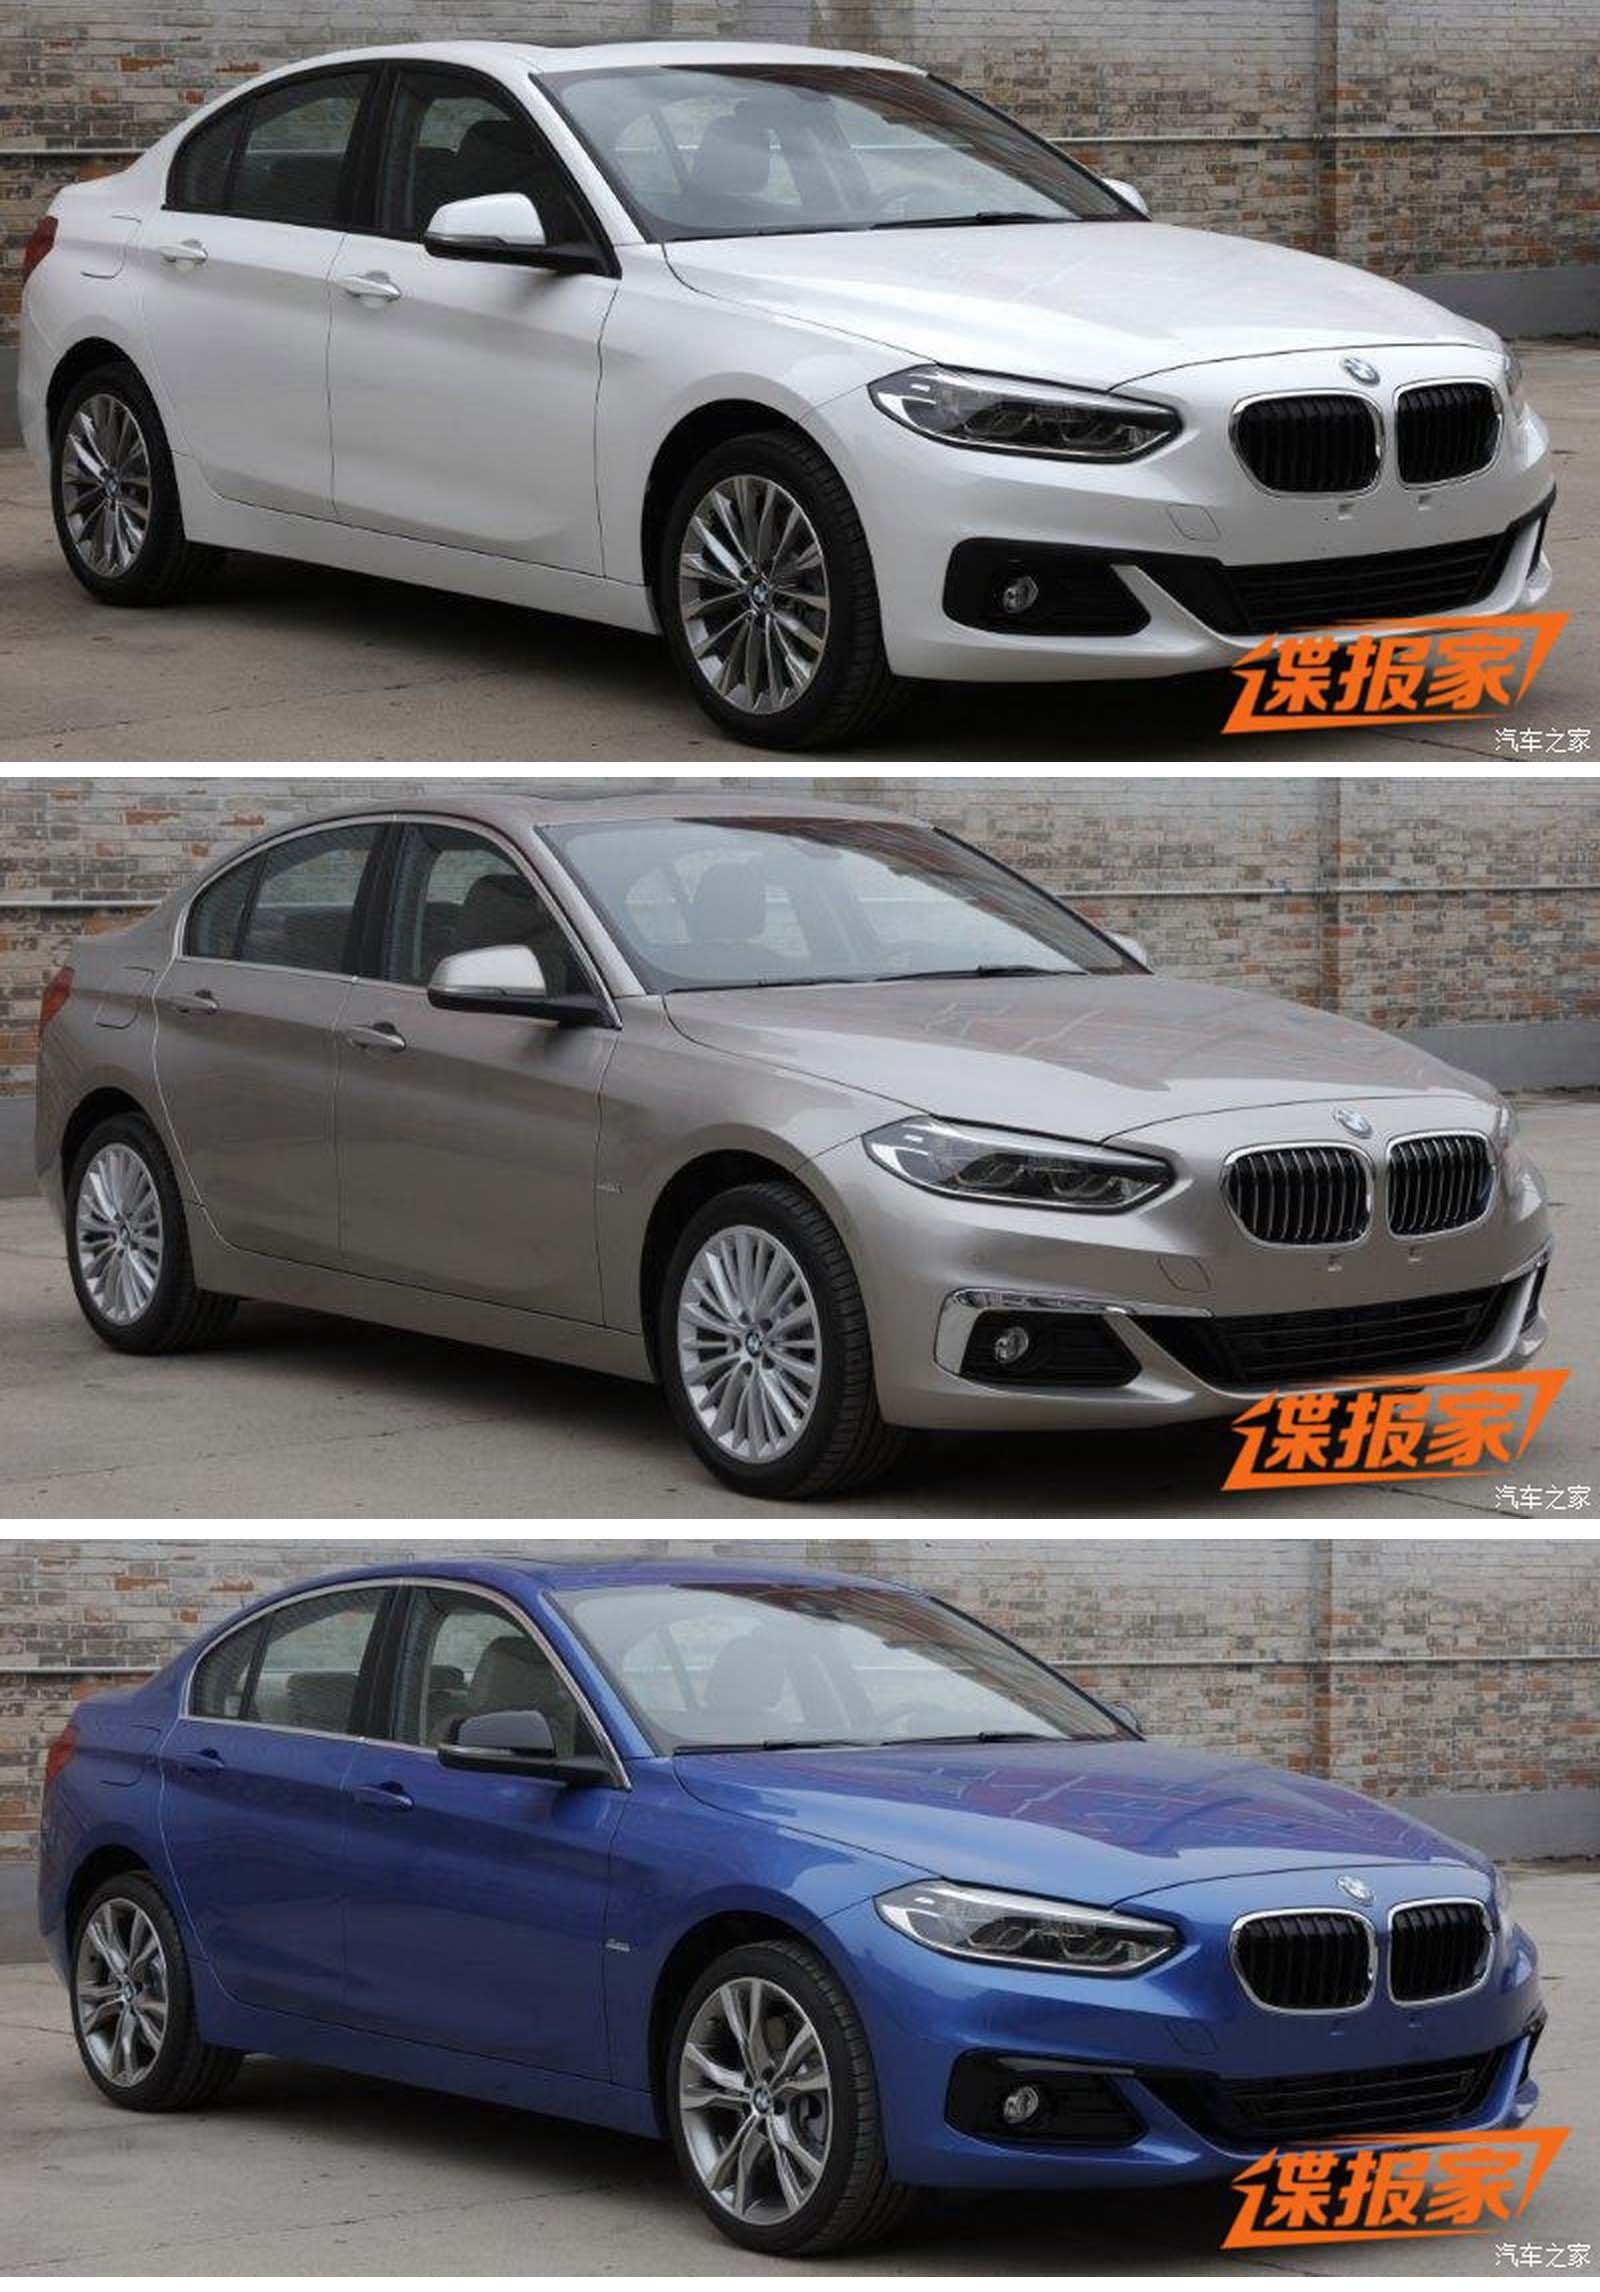 BMW, bmw 1 series sedan china: BMW 1-Series Sedan Akan Serang Pasar China Tahun 2017